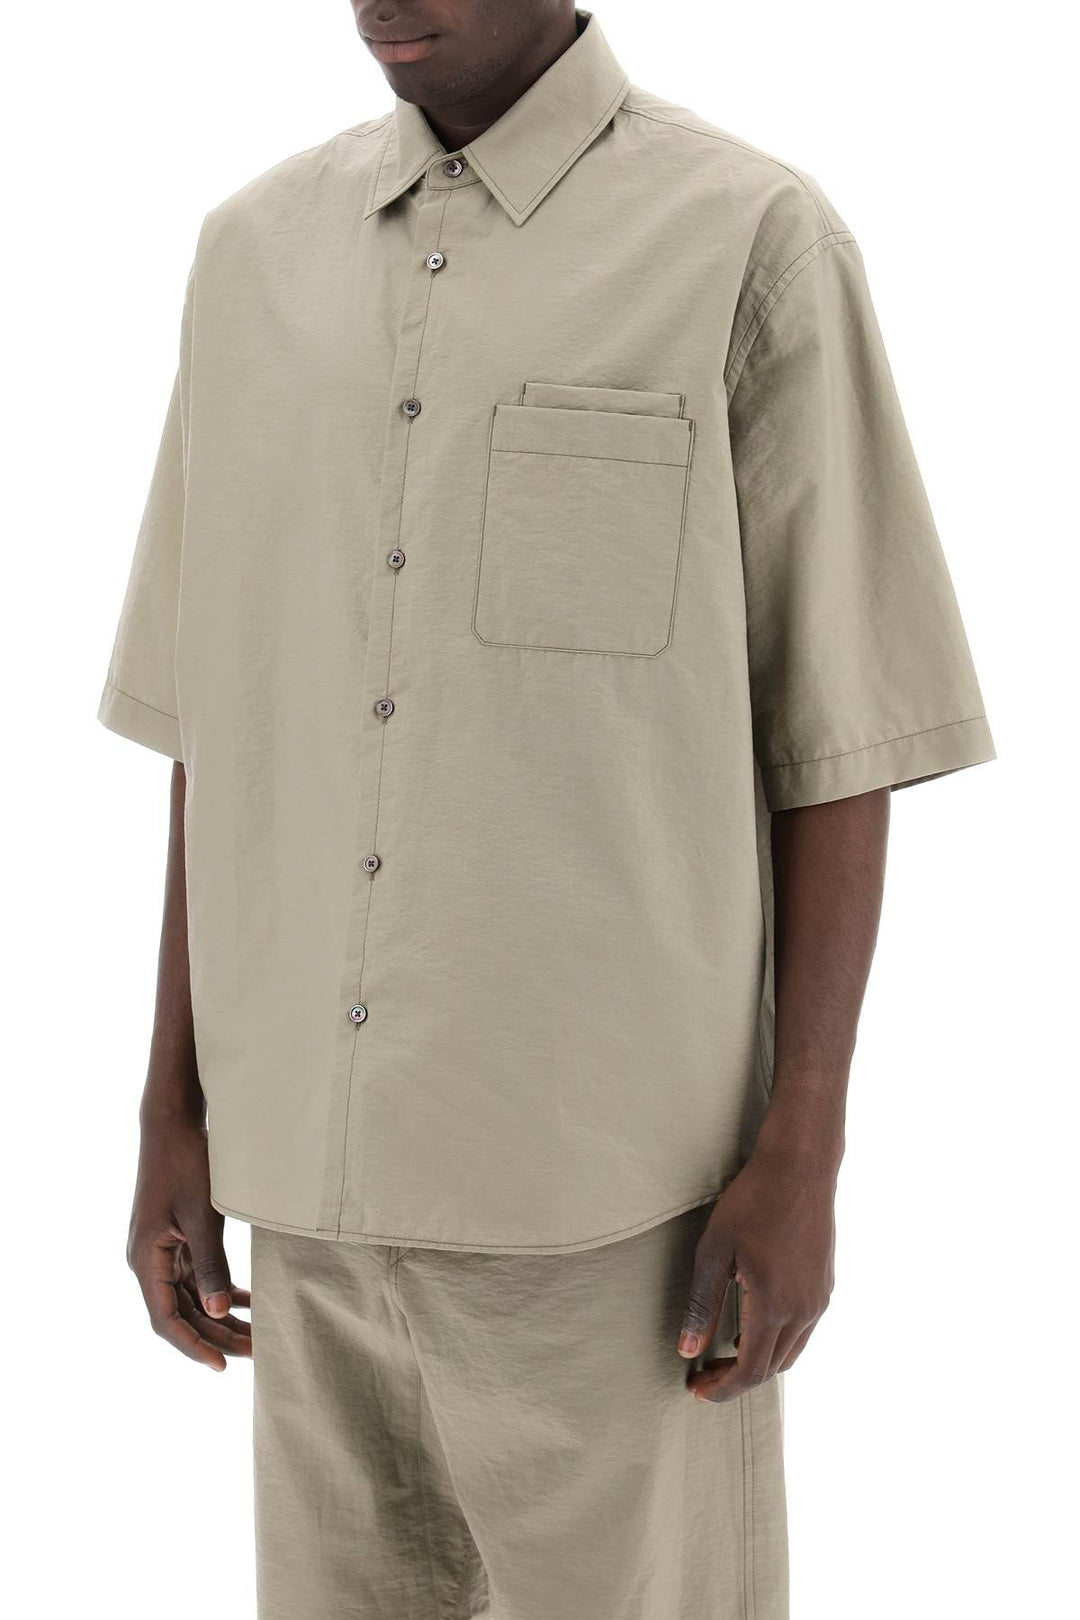 Lemaire Short Sleeved Cotton Fluid Shirt   Khaki